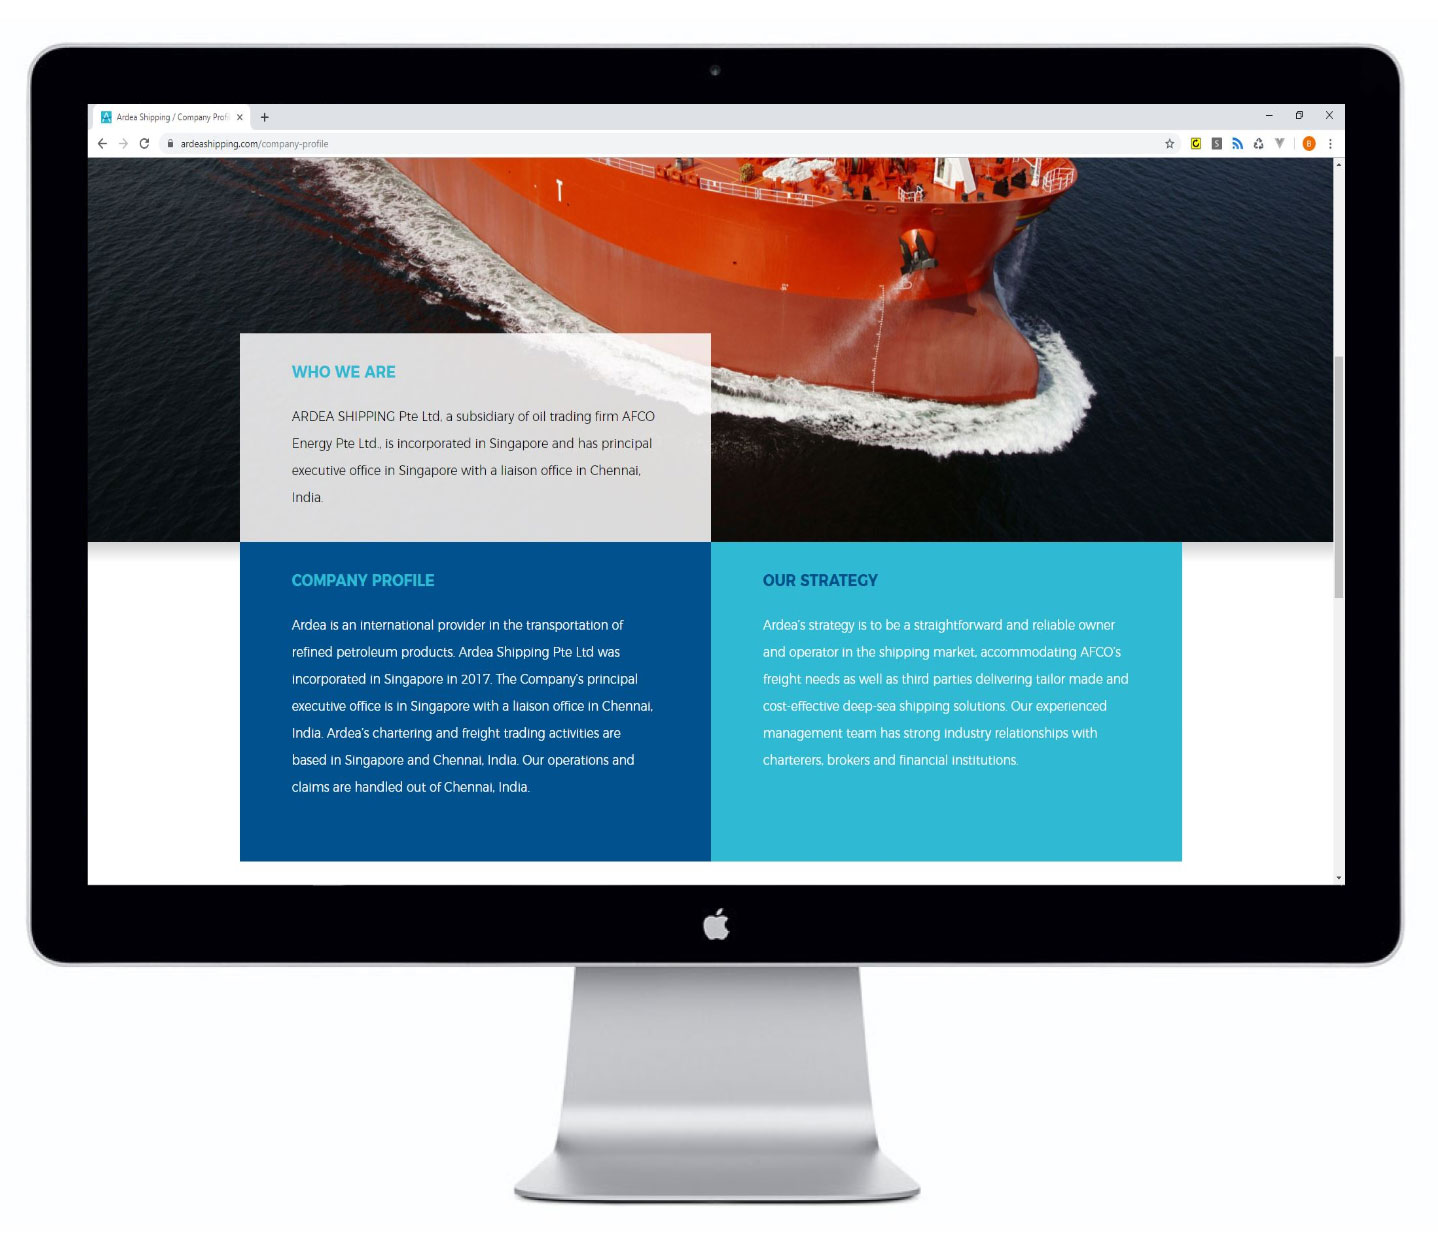 Ontwerp responsive website Ardea shipping